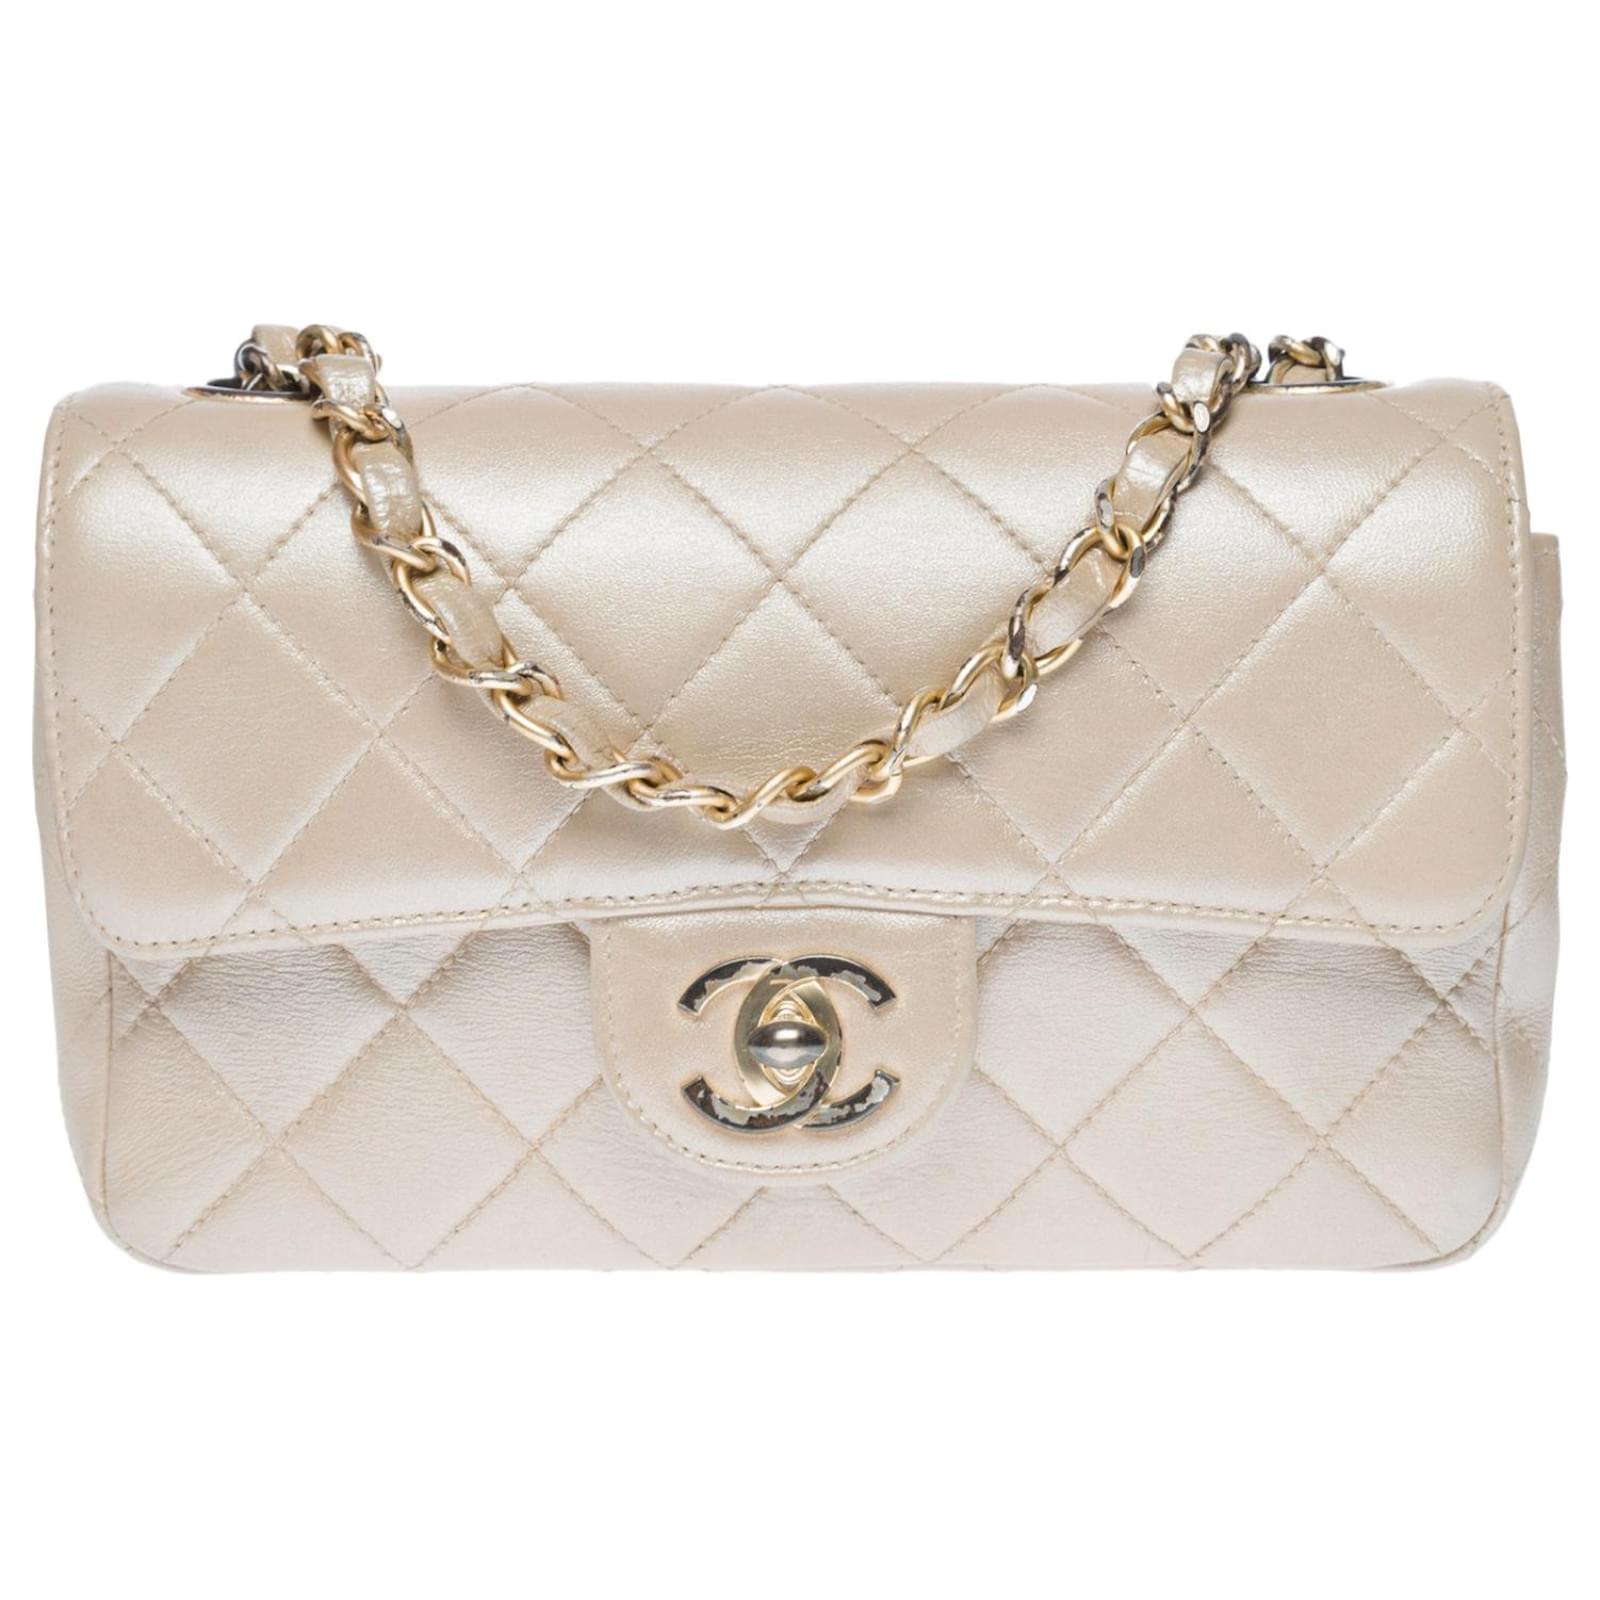 Rare Chanel Timeless Mini Flap bag handbag in metallic mother-of